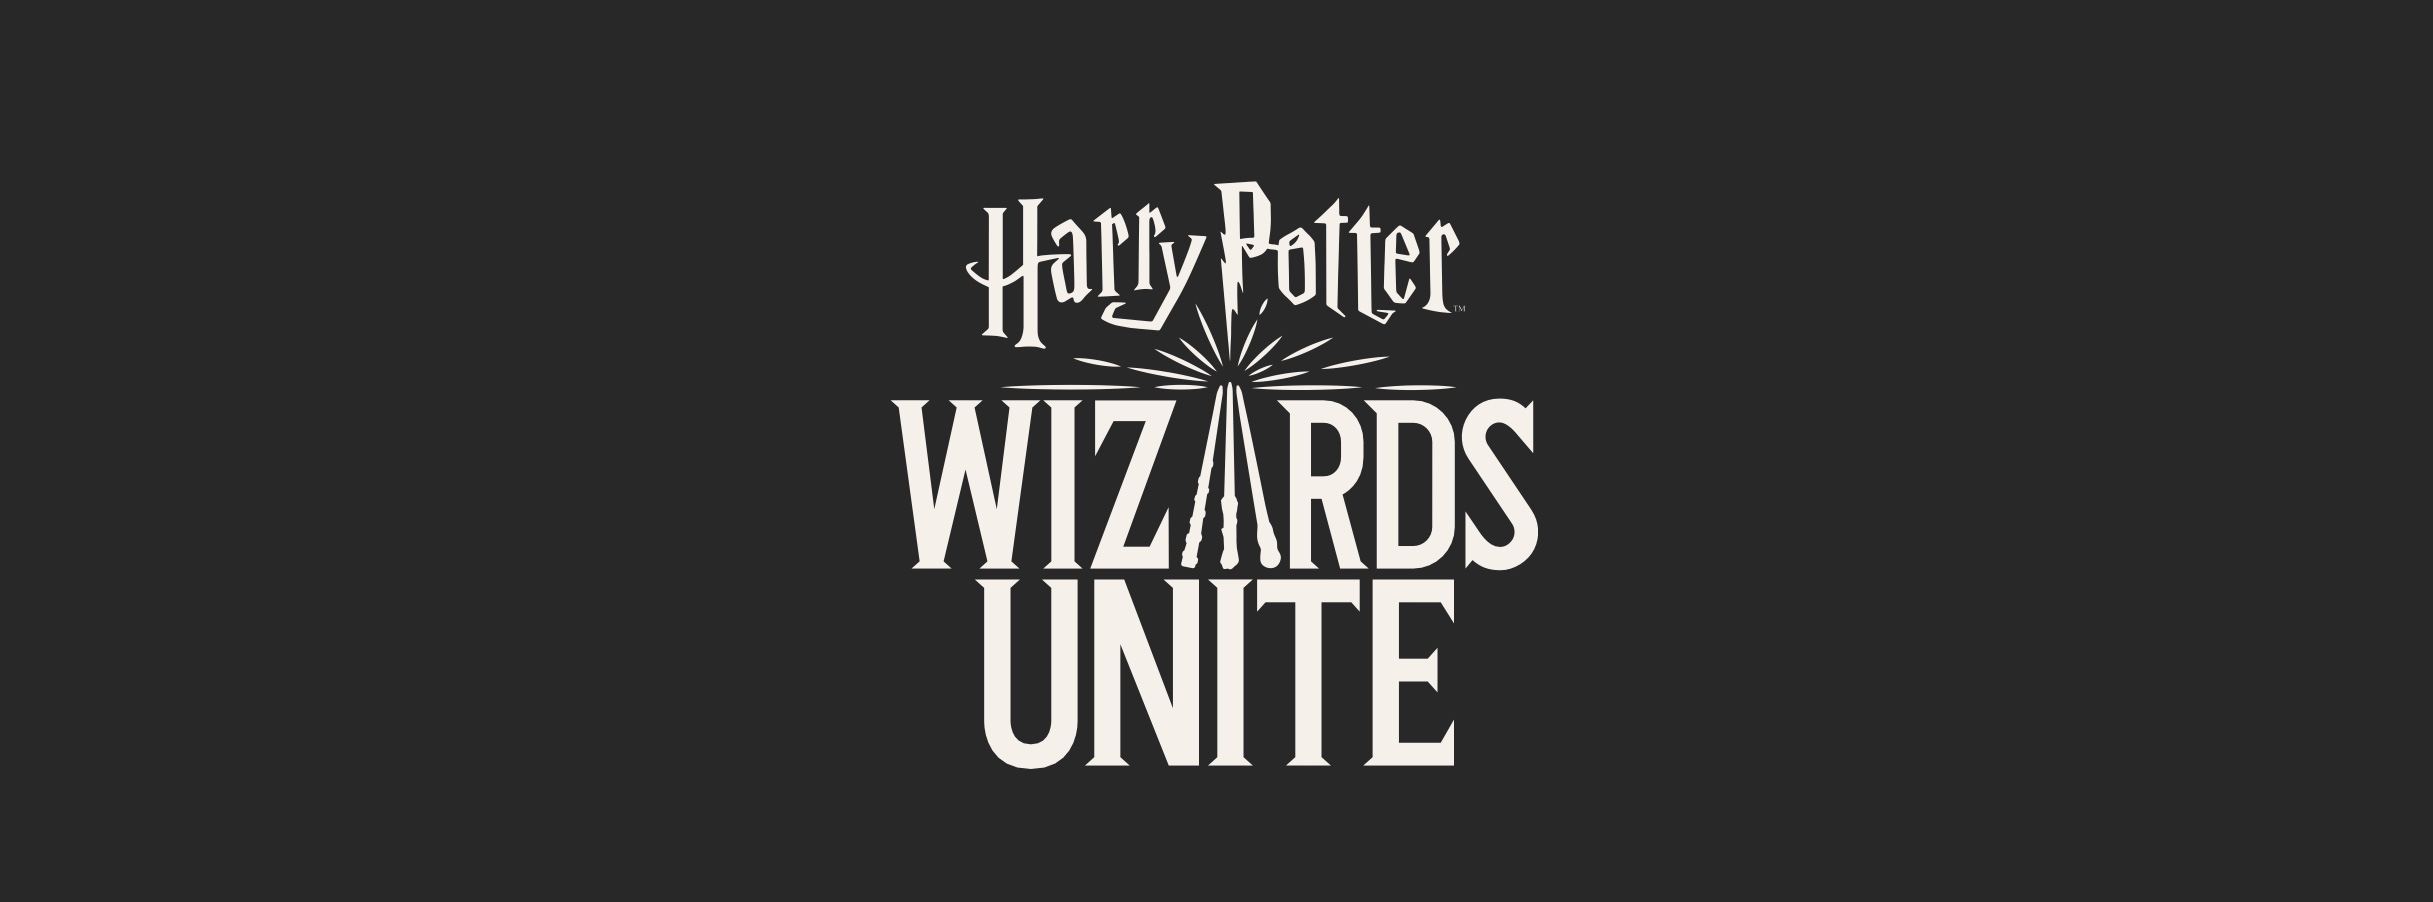 Harry Potter: Wizards Unite launches June 21